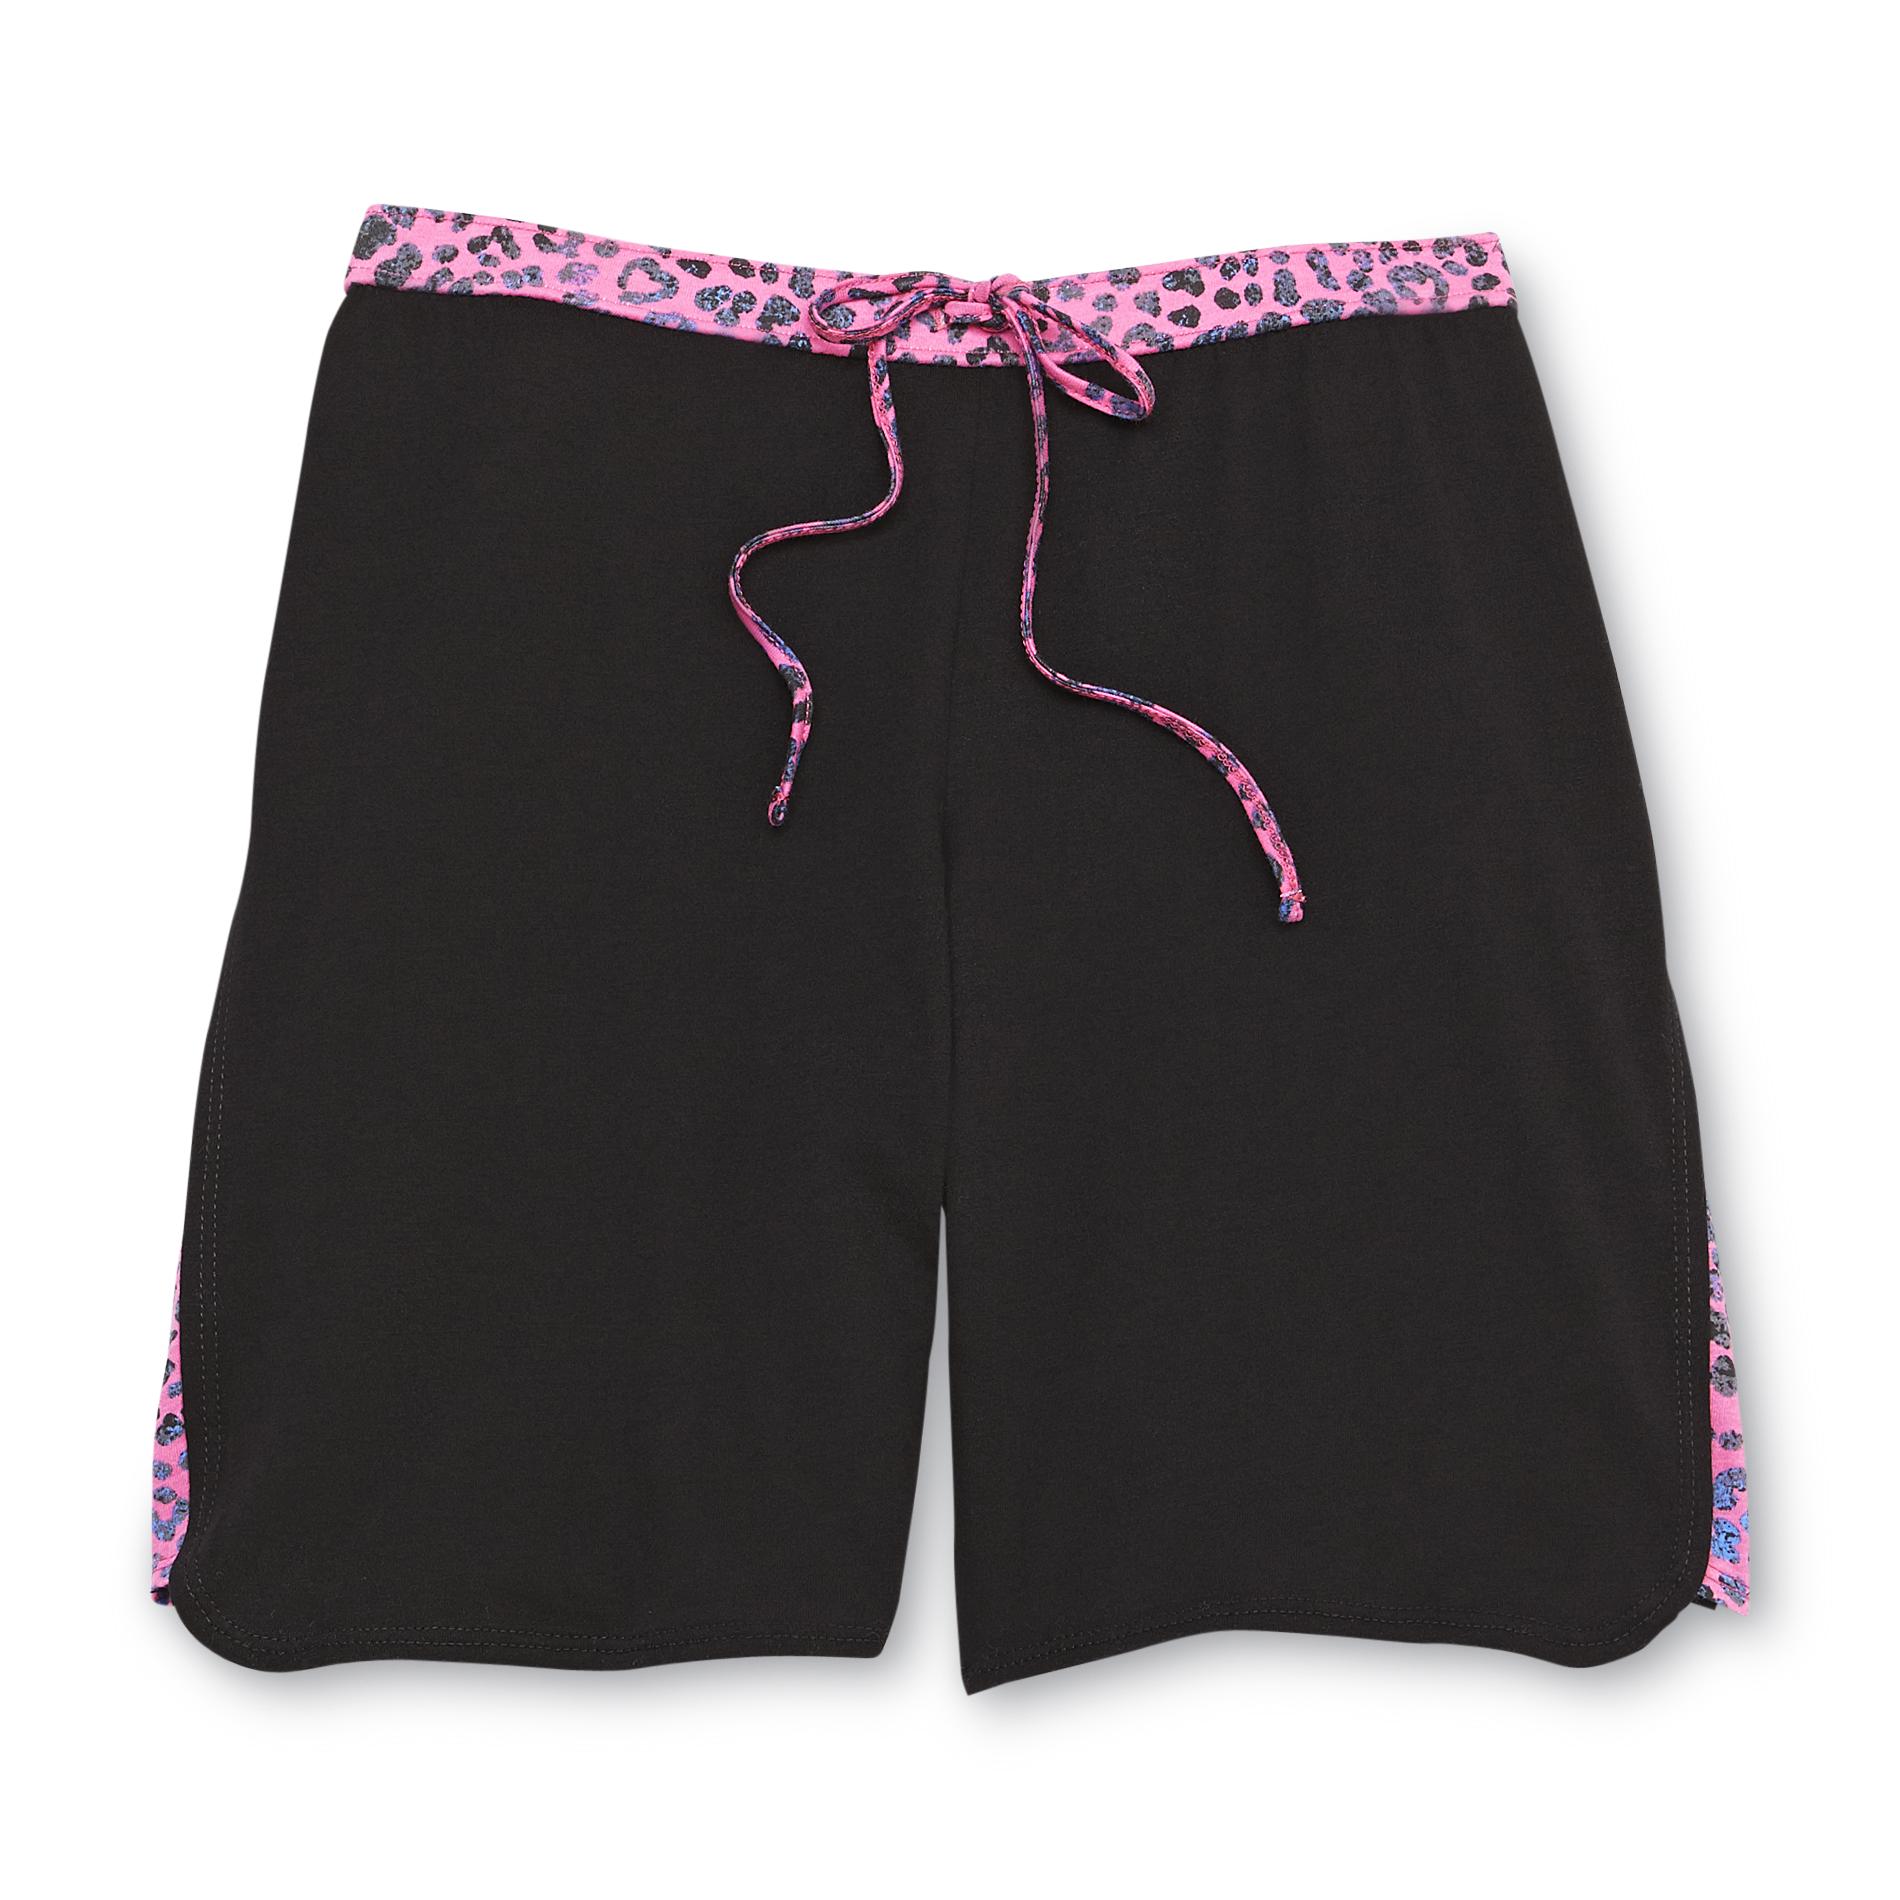 Joe Boxer Women's Knit Bermuda Sleep Shorts - Leopard